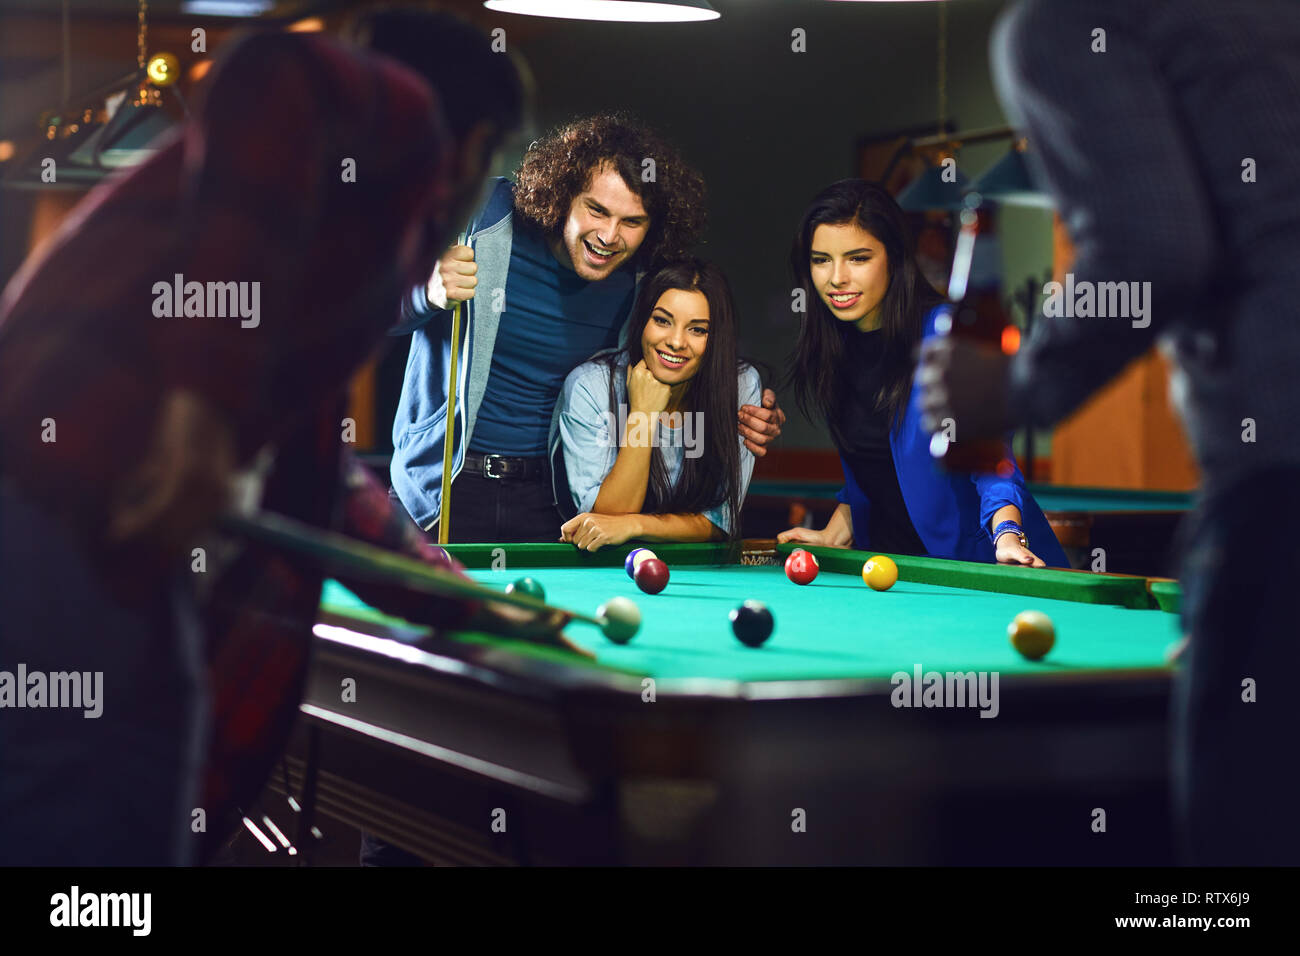 Friends play billiards. Stock Photo